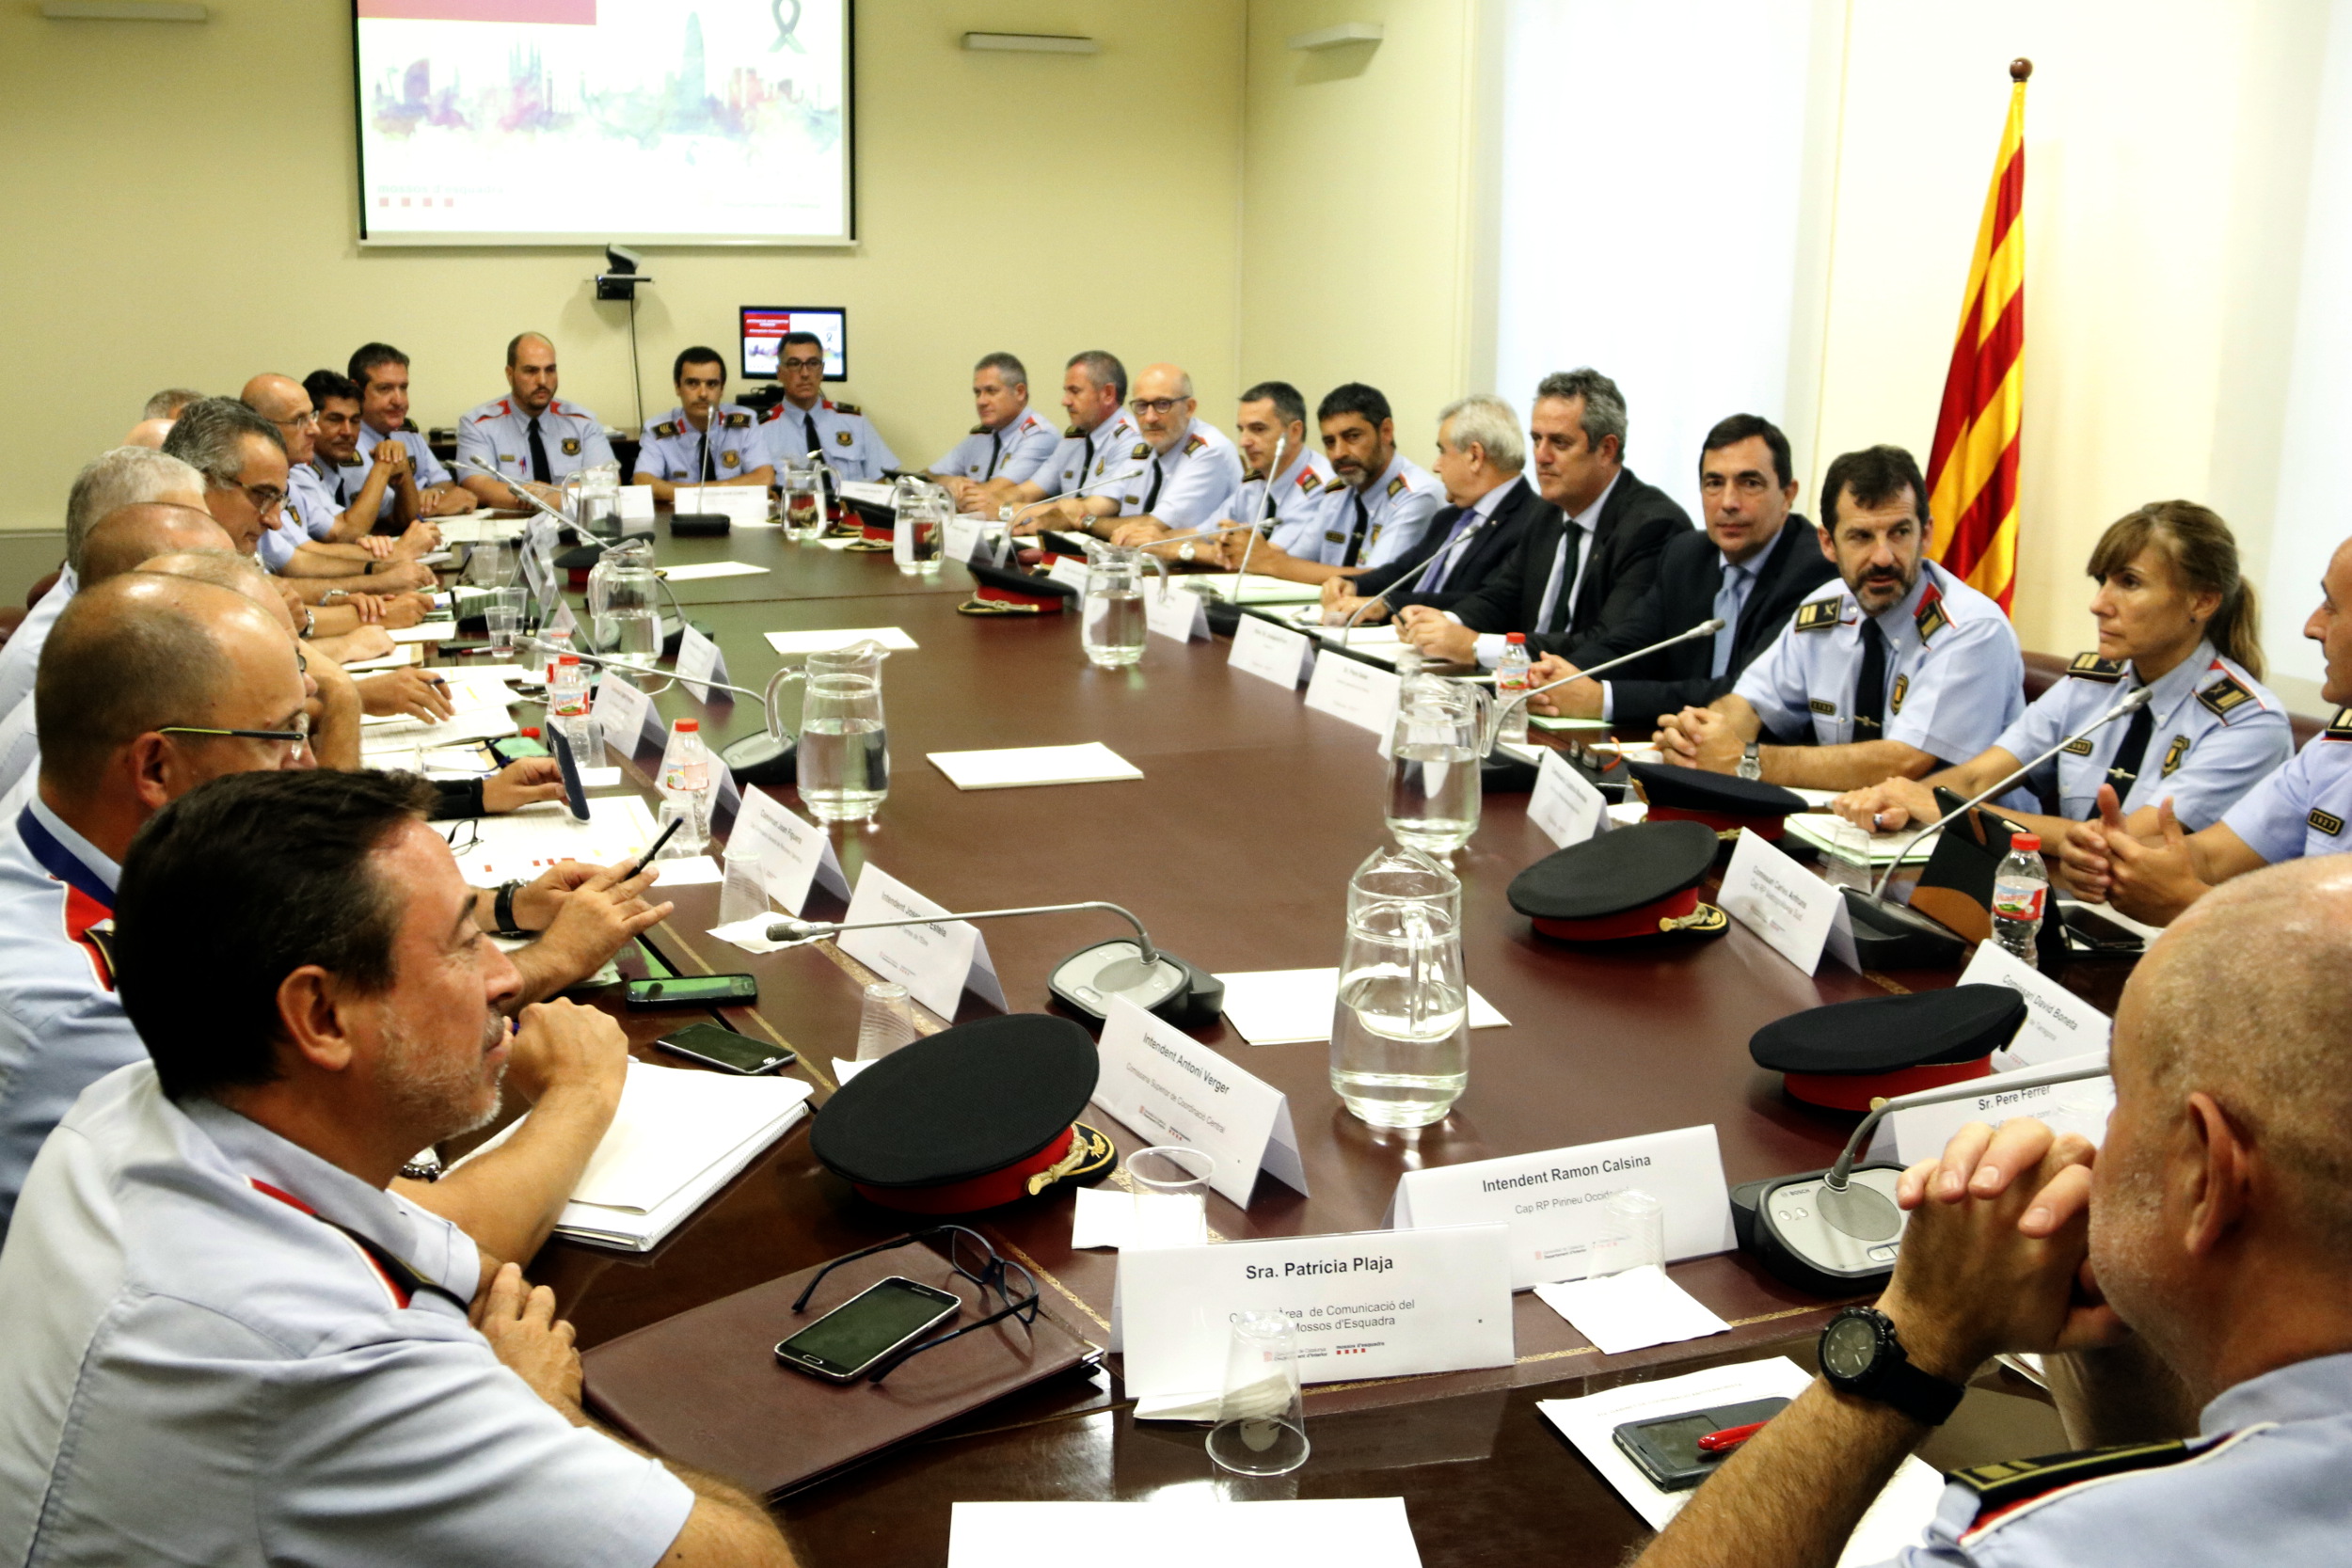 The antiterrorist coordination meeting held in Barcelona on Monday